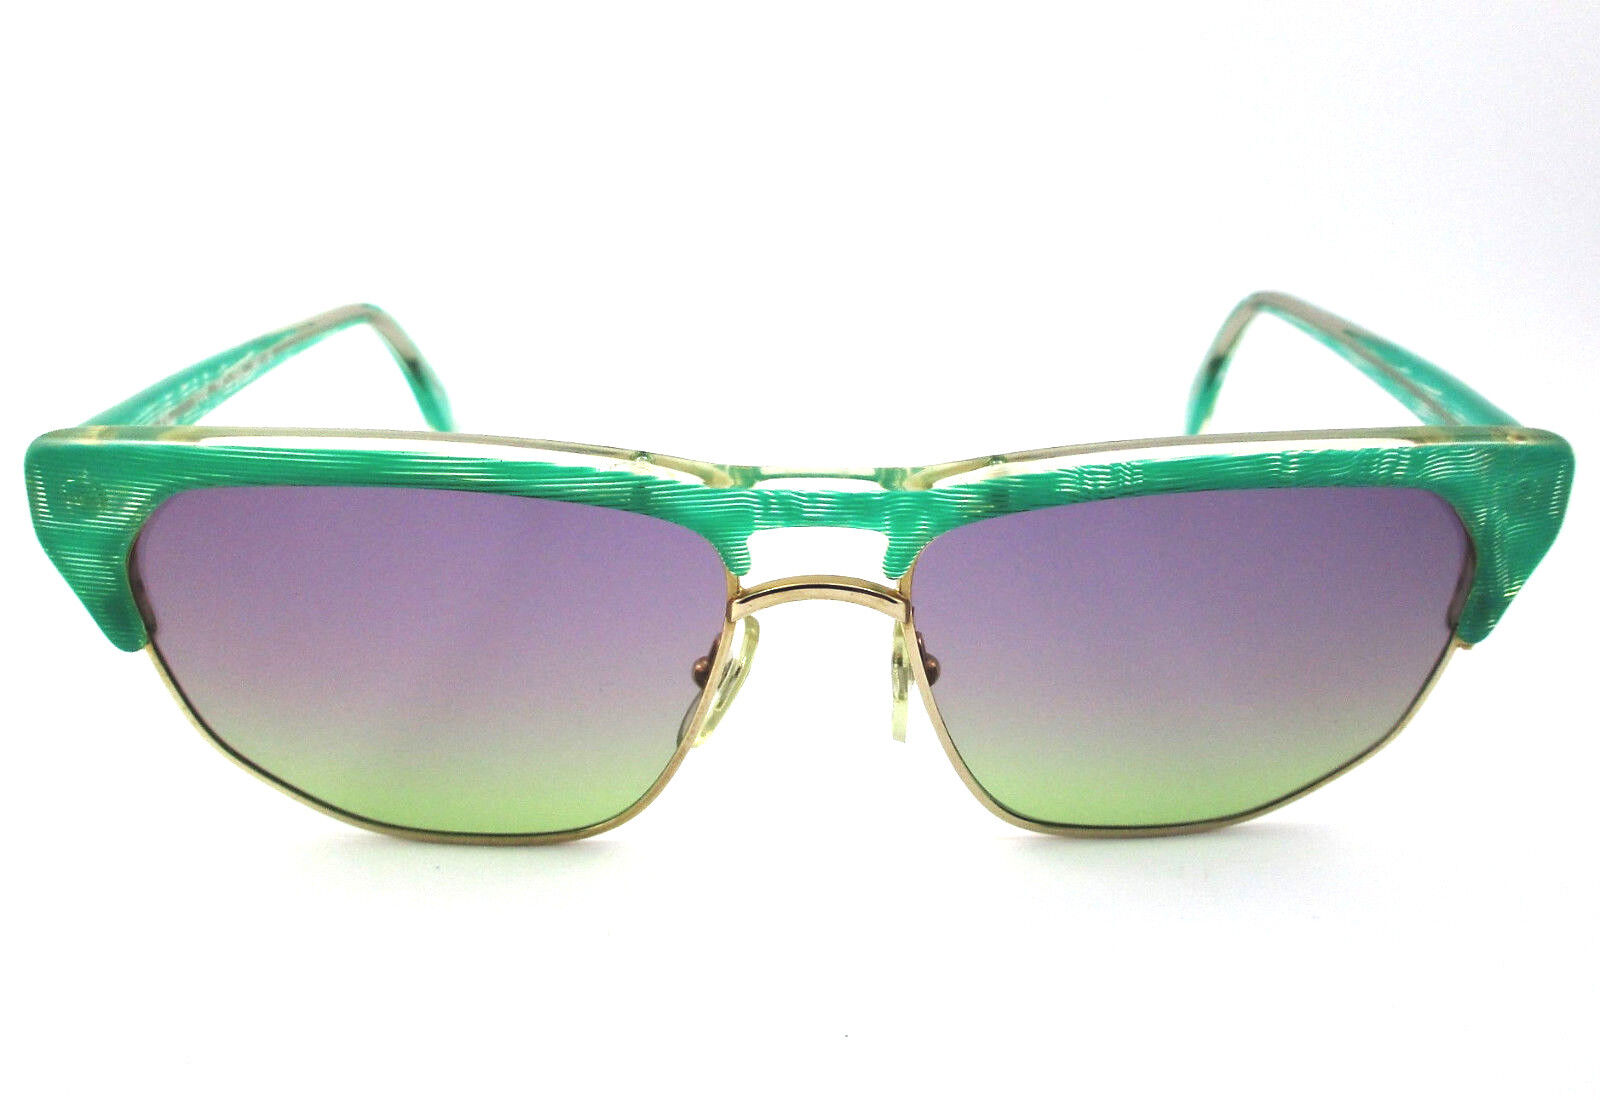 occhiali da sole Filou vintage unisex mod.1005 colore trasparente/verde Zapas w specjalnej cenie